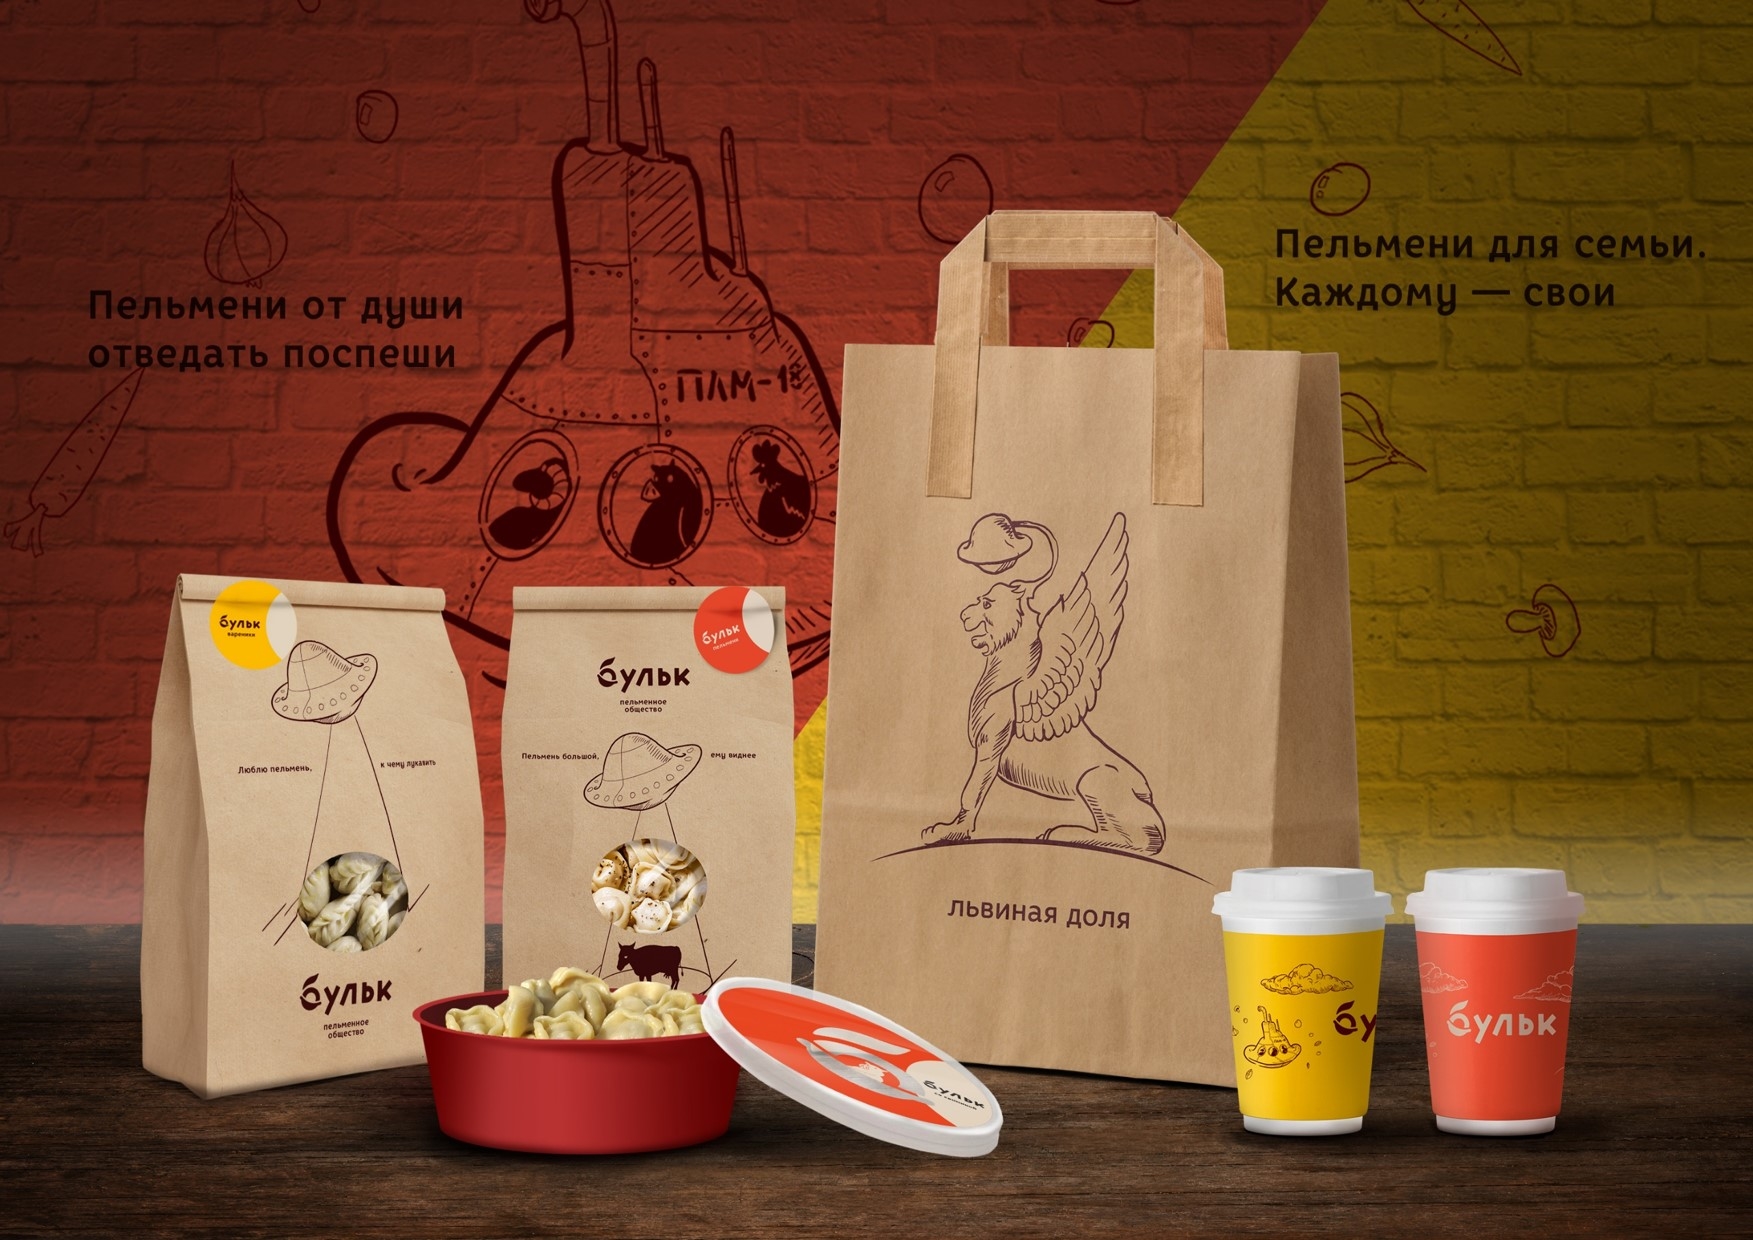 Brandson Created Brand, Packaging and Interior Design for Bulk Food Brand